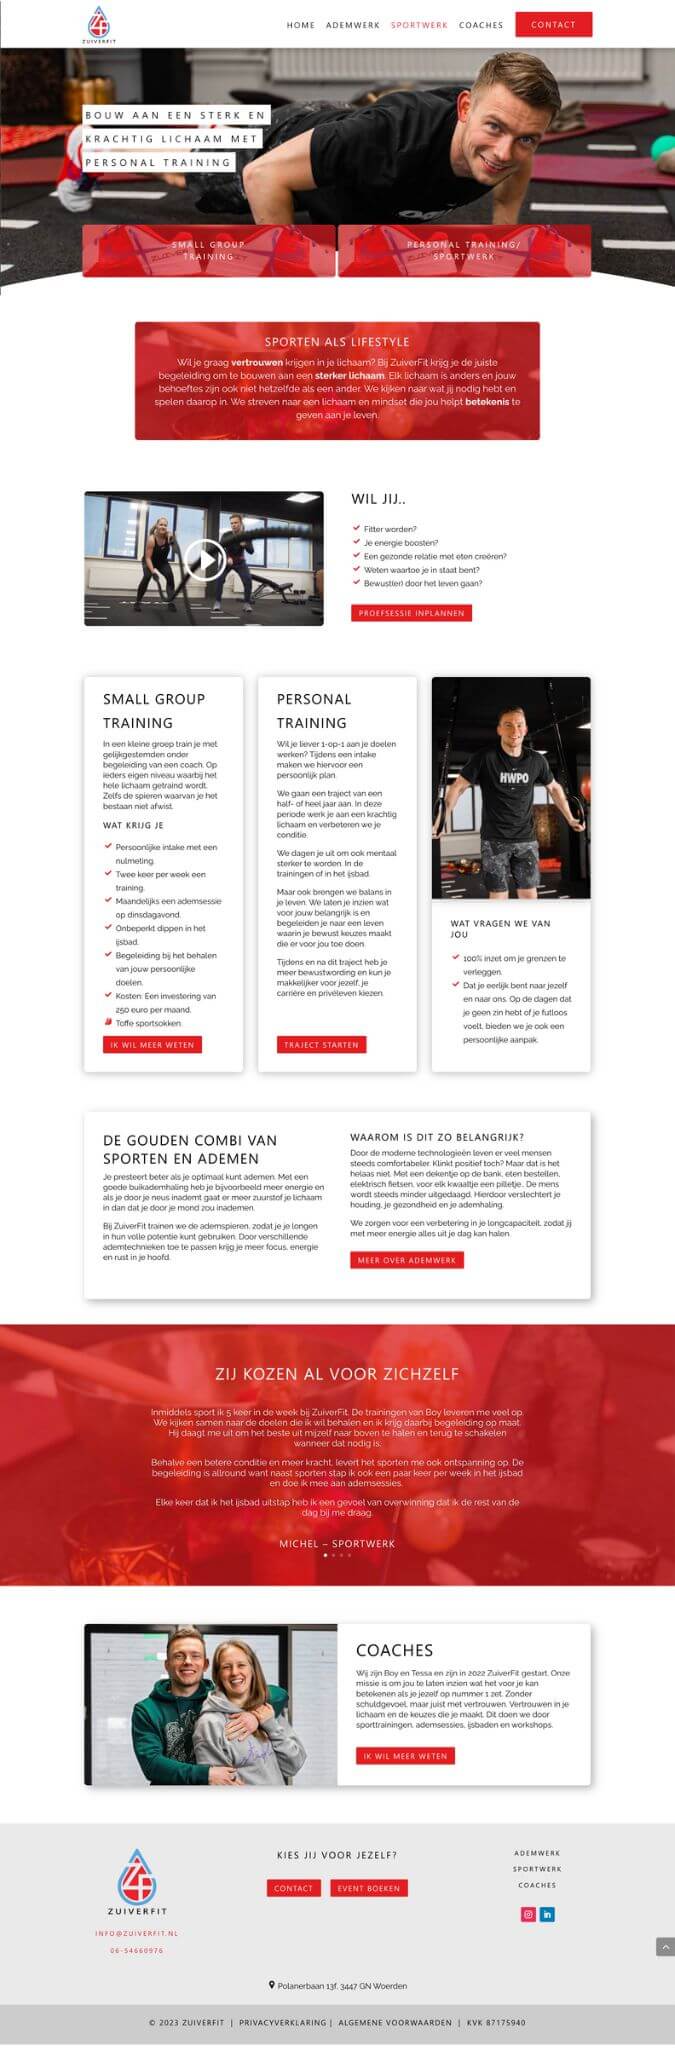 Sportwerk personal training website Zuiverfit